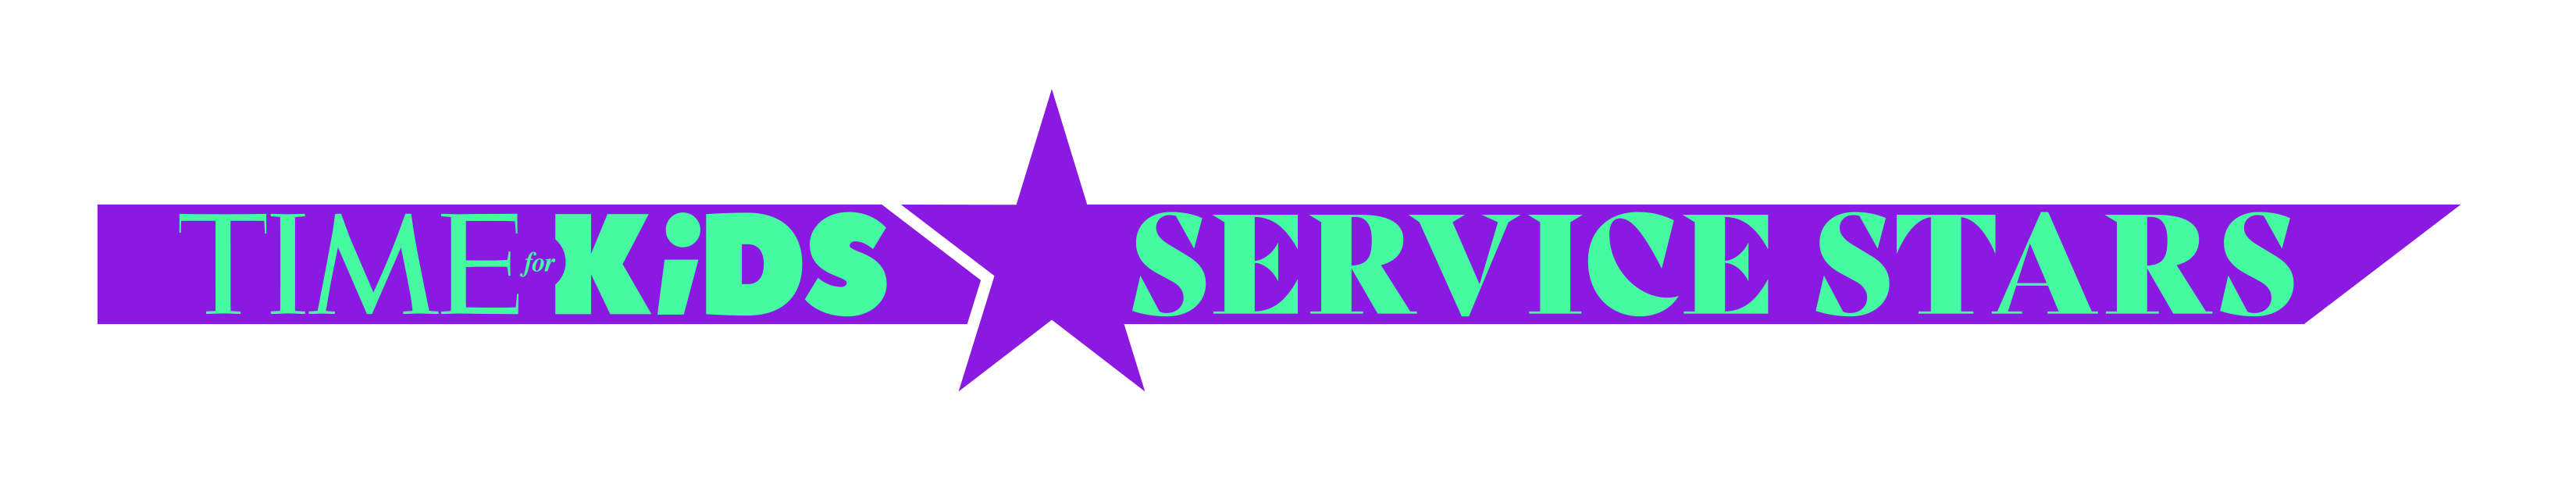 Service Stars logo. 